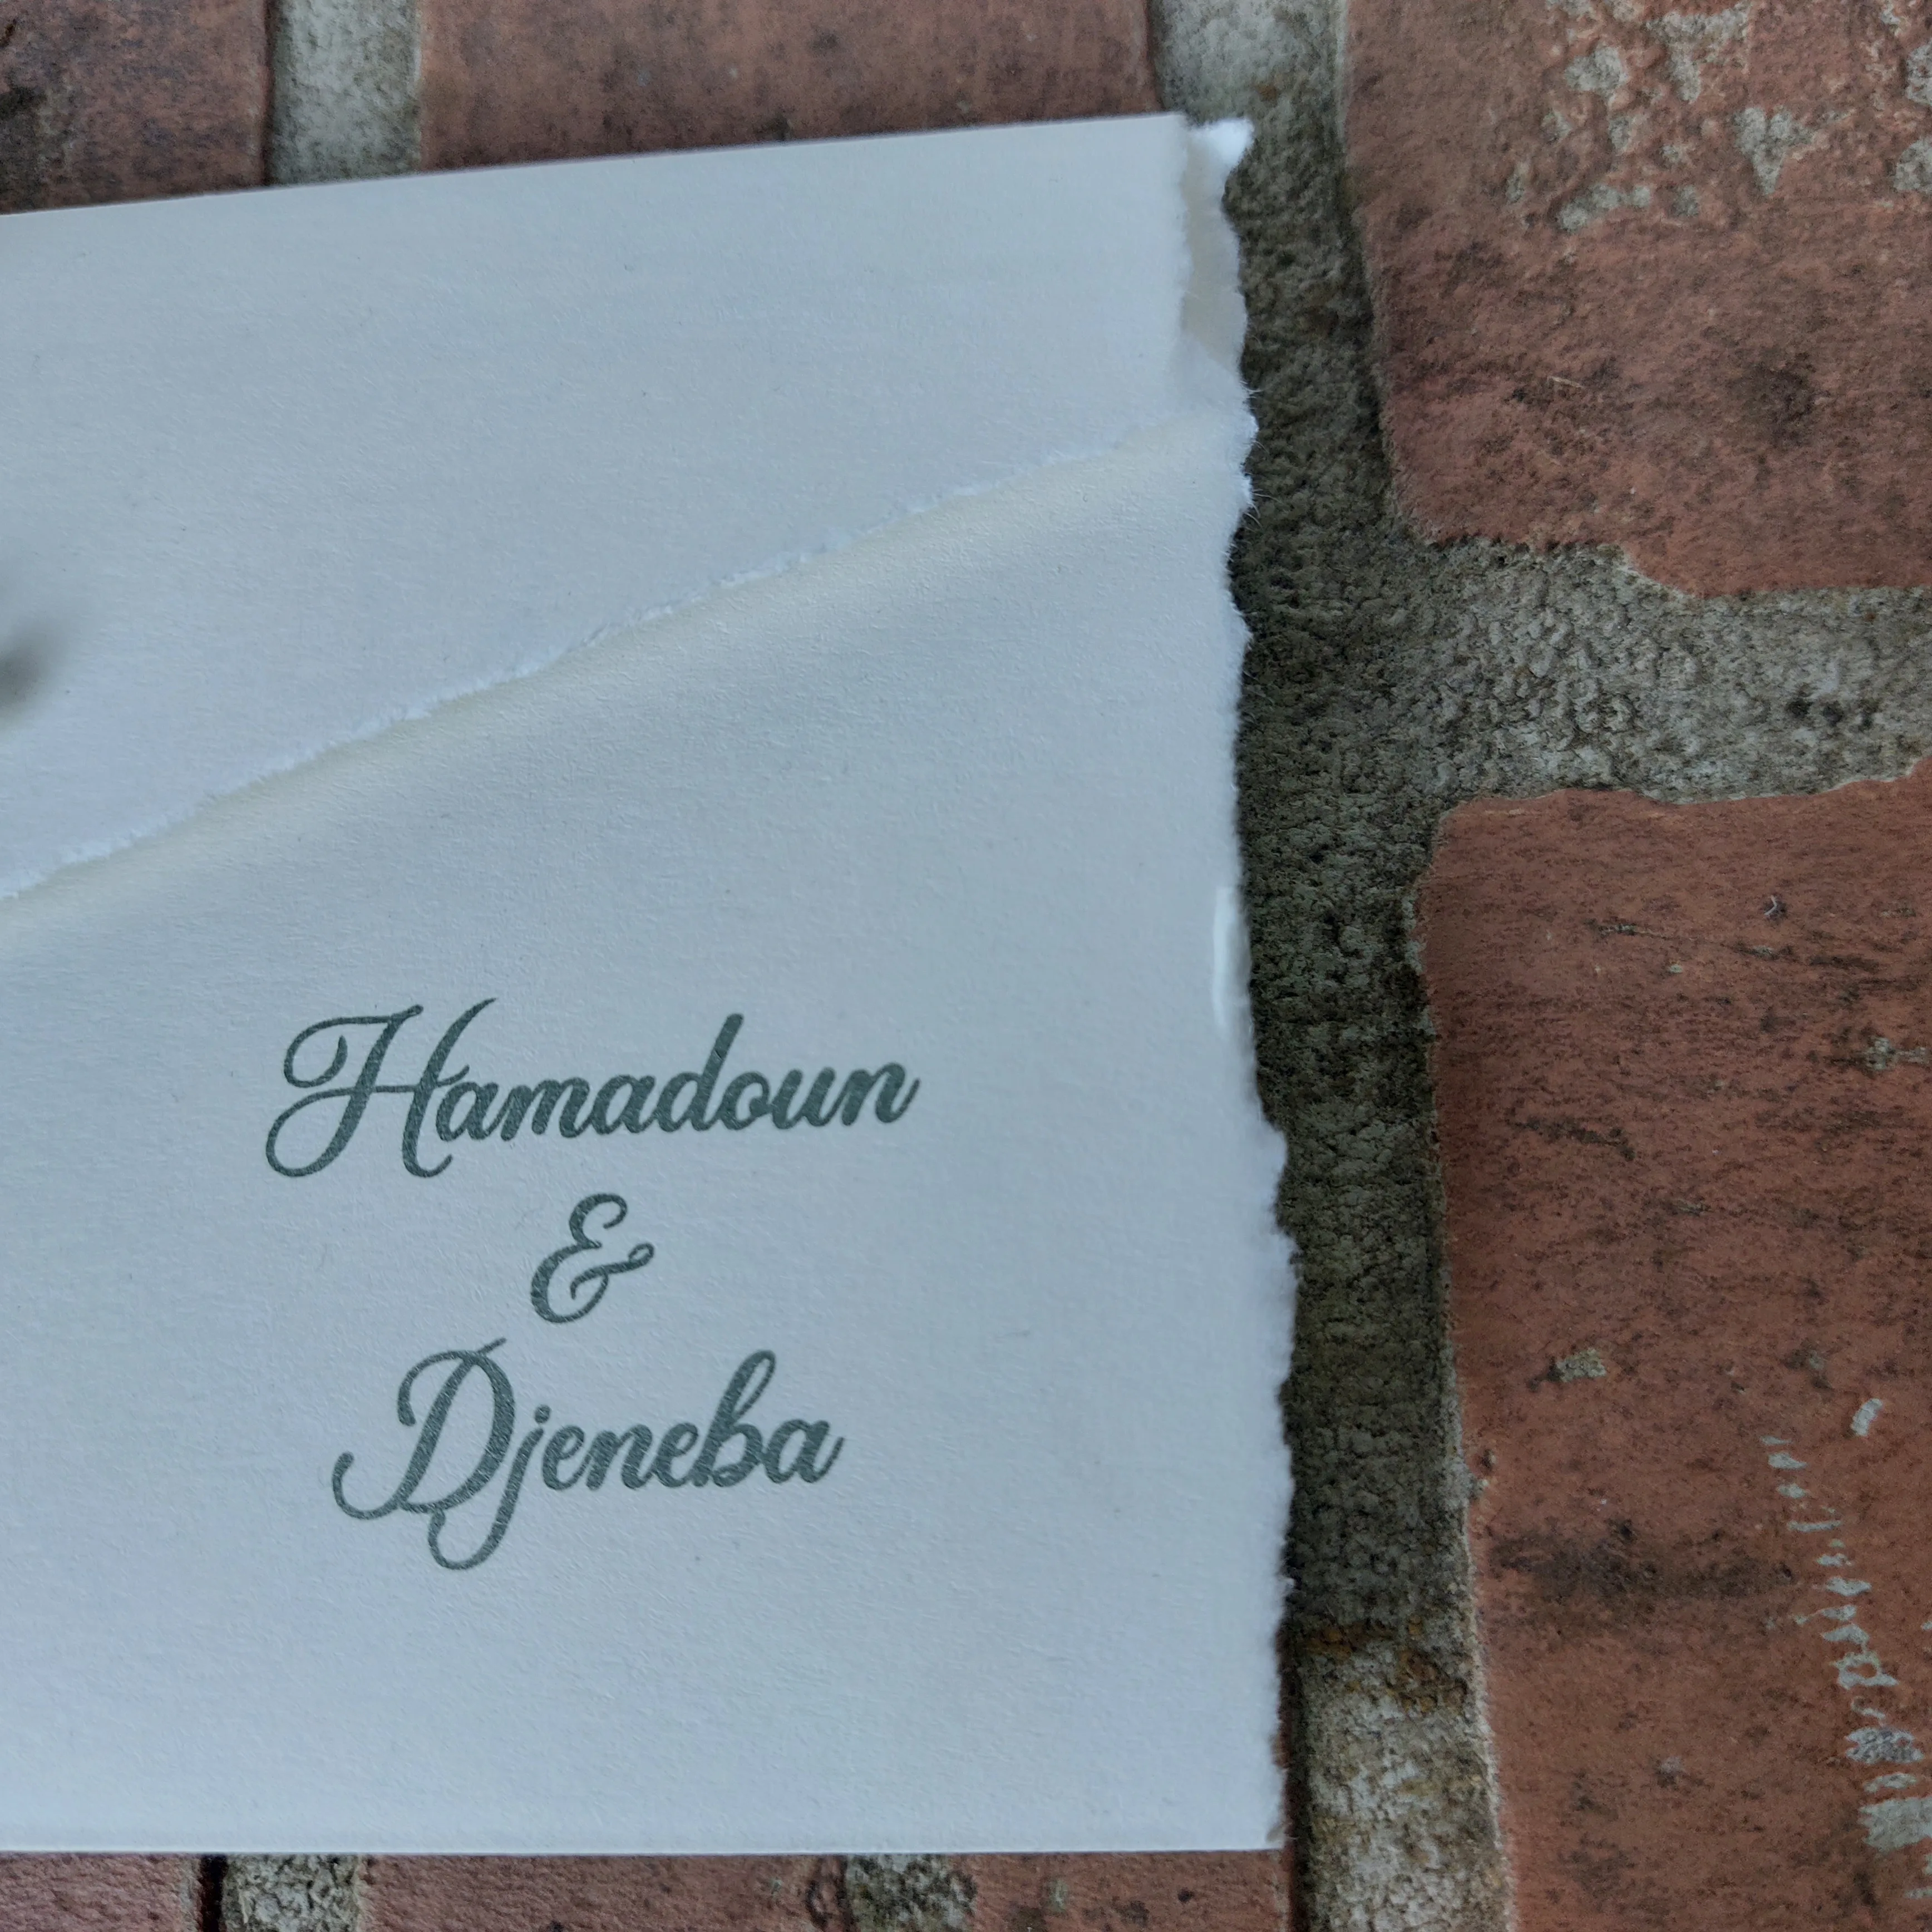 Minimalist Deckled Edge Wedding Invitation with Wax Seal